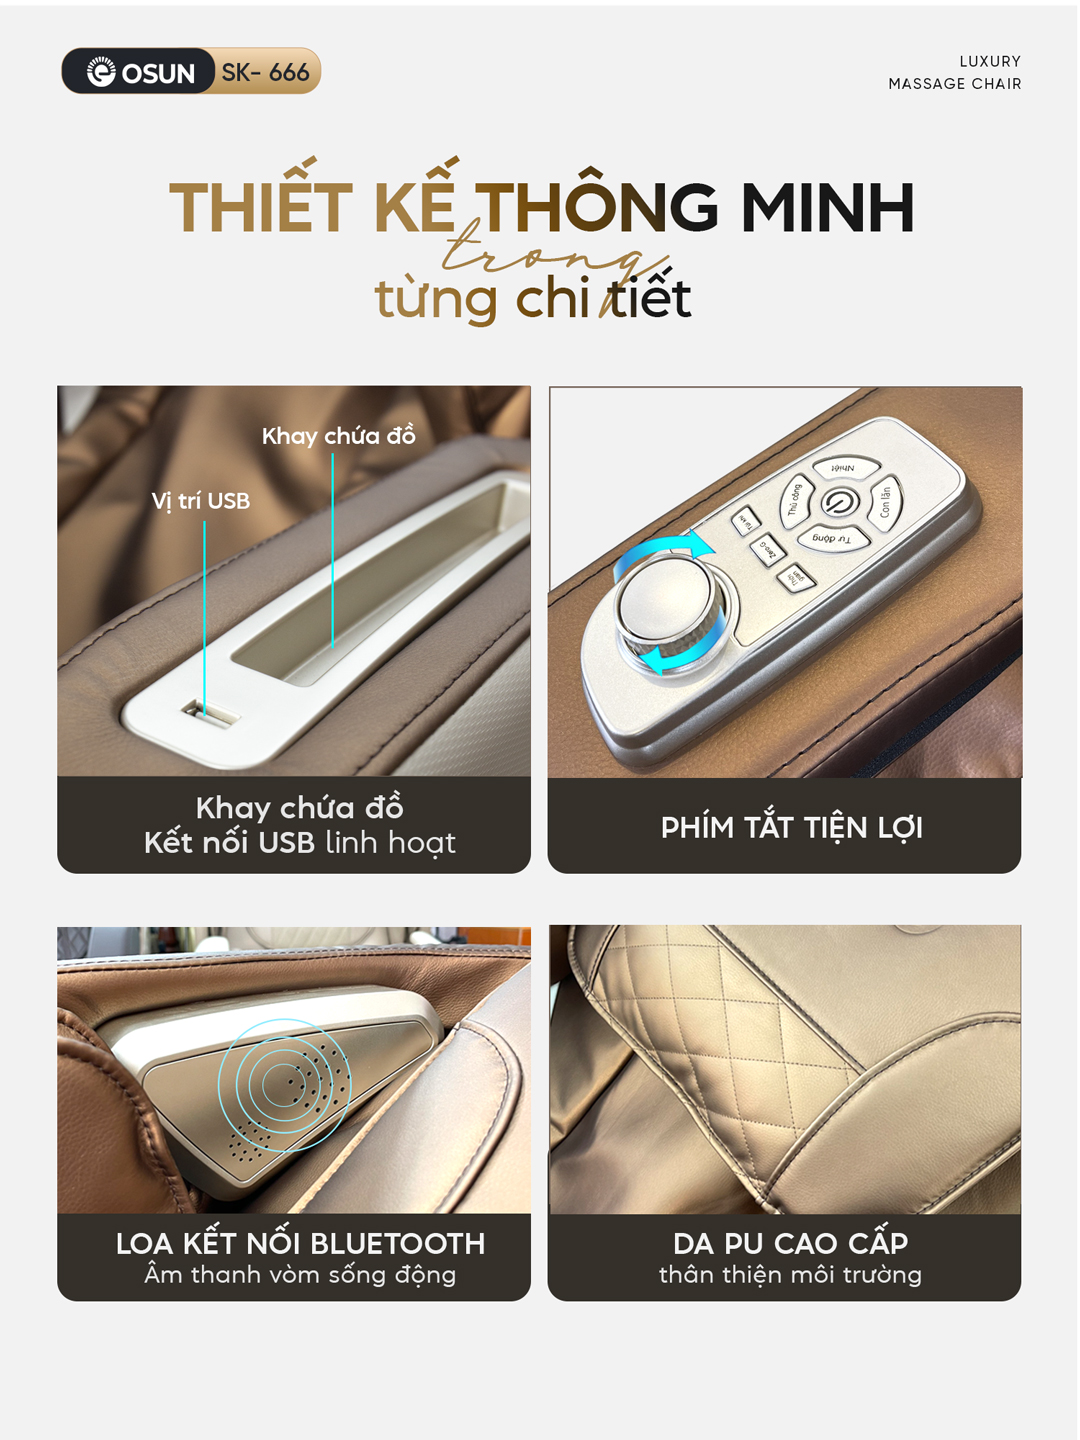 thiet-ke-thong-minh-osun-sk-666